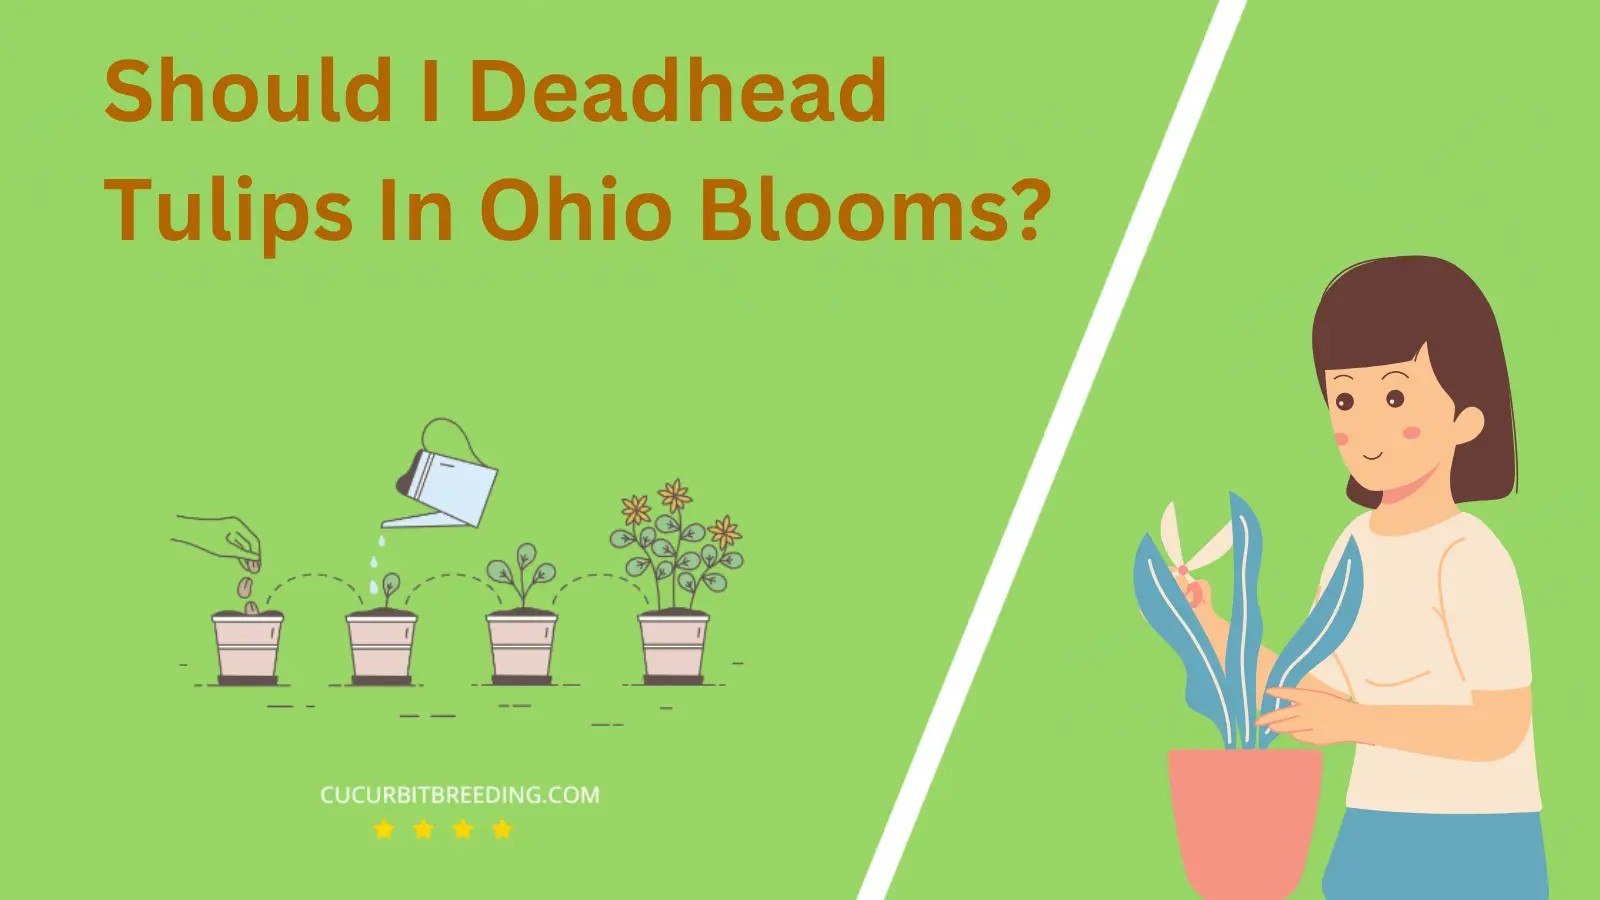 Should I Deadhead Tulips In Ohio Blooms?